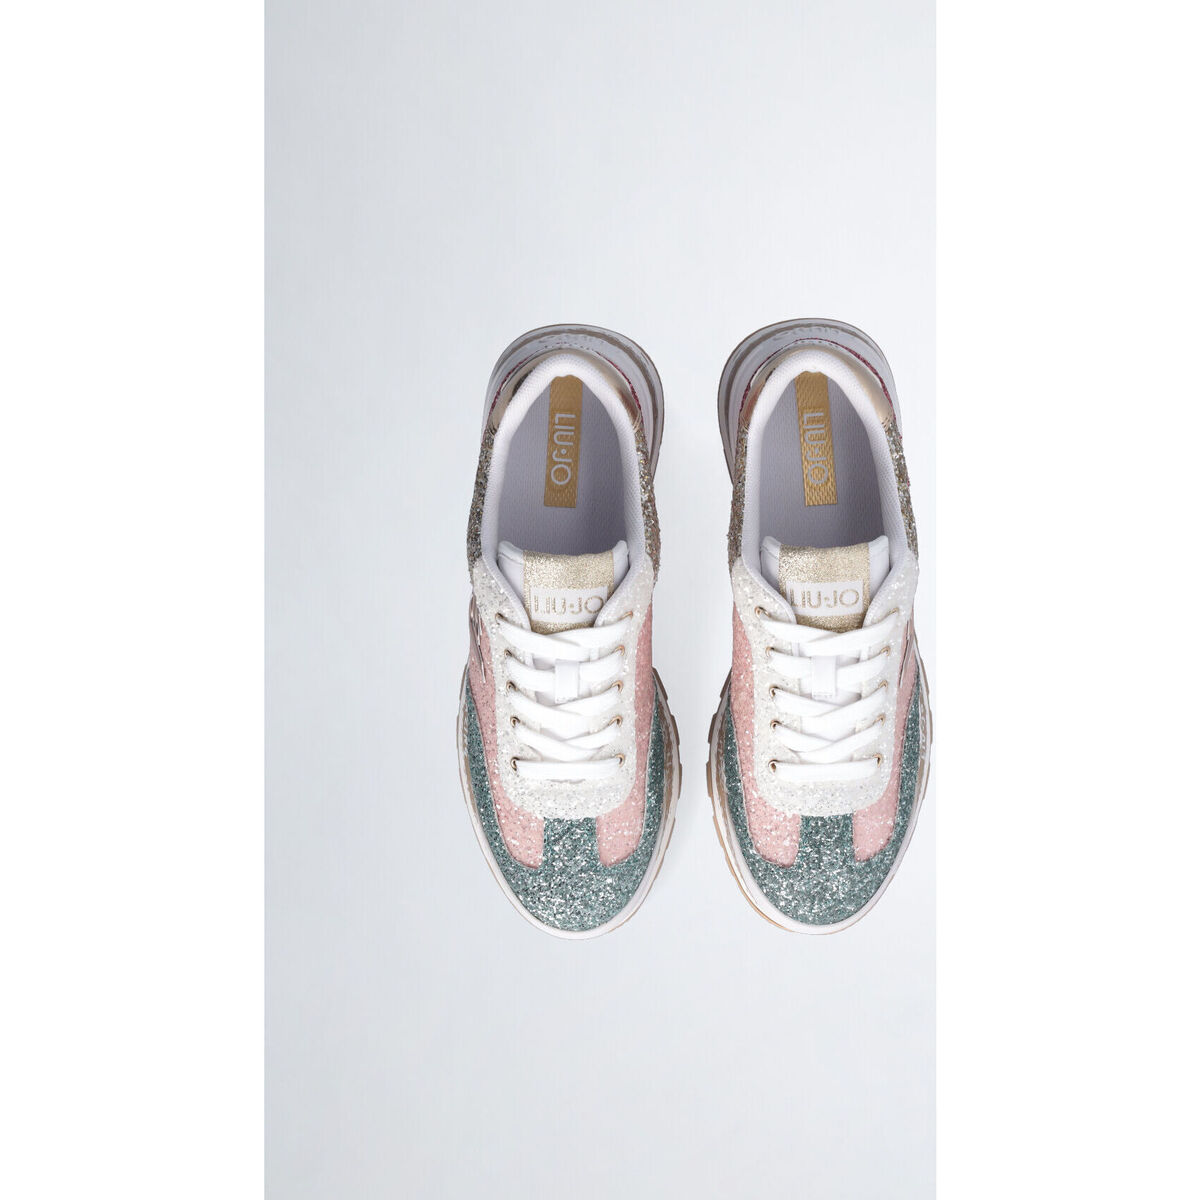 Liu Jo Multicolore Sneakers plateforme glitter 8Nn76Iv1